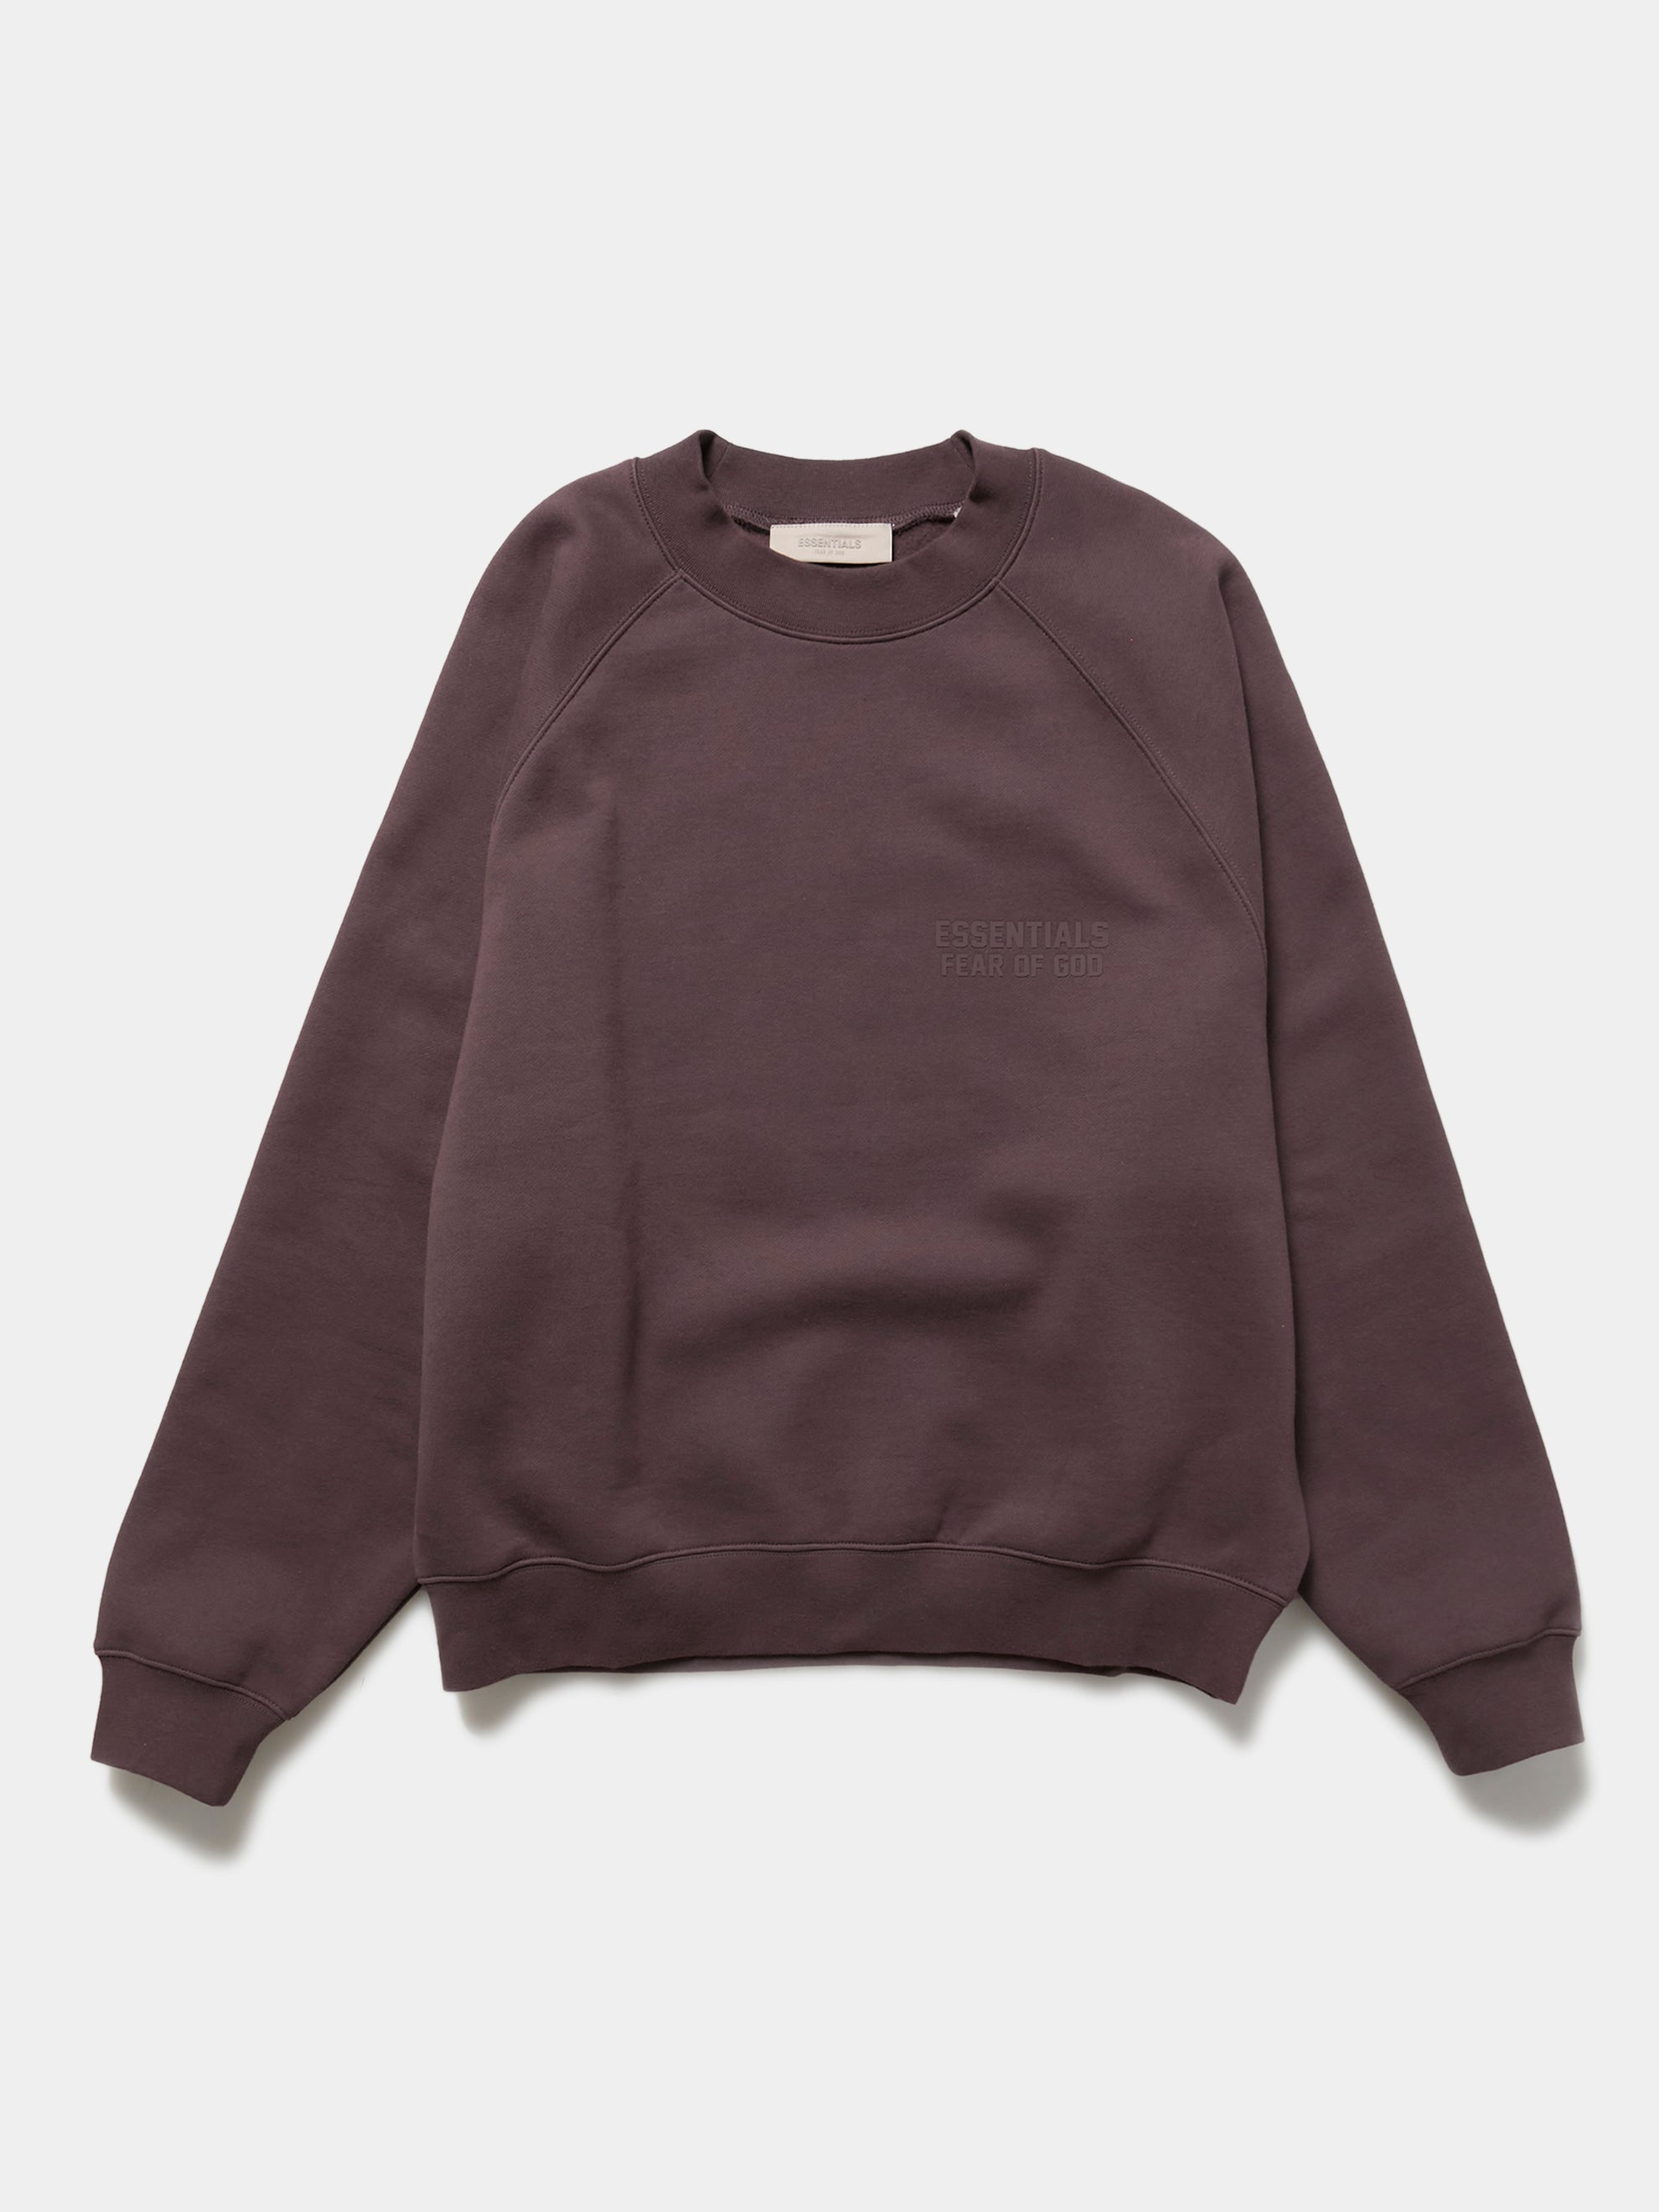 Essentials Crewneck Sweatshirt (Plum)